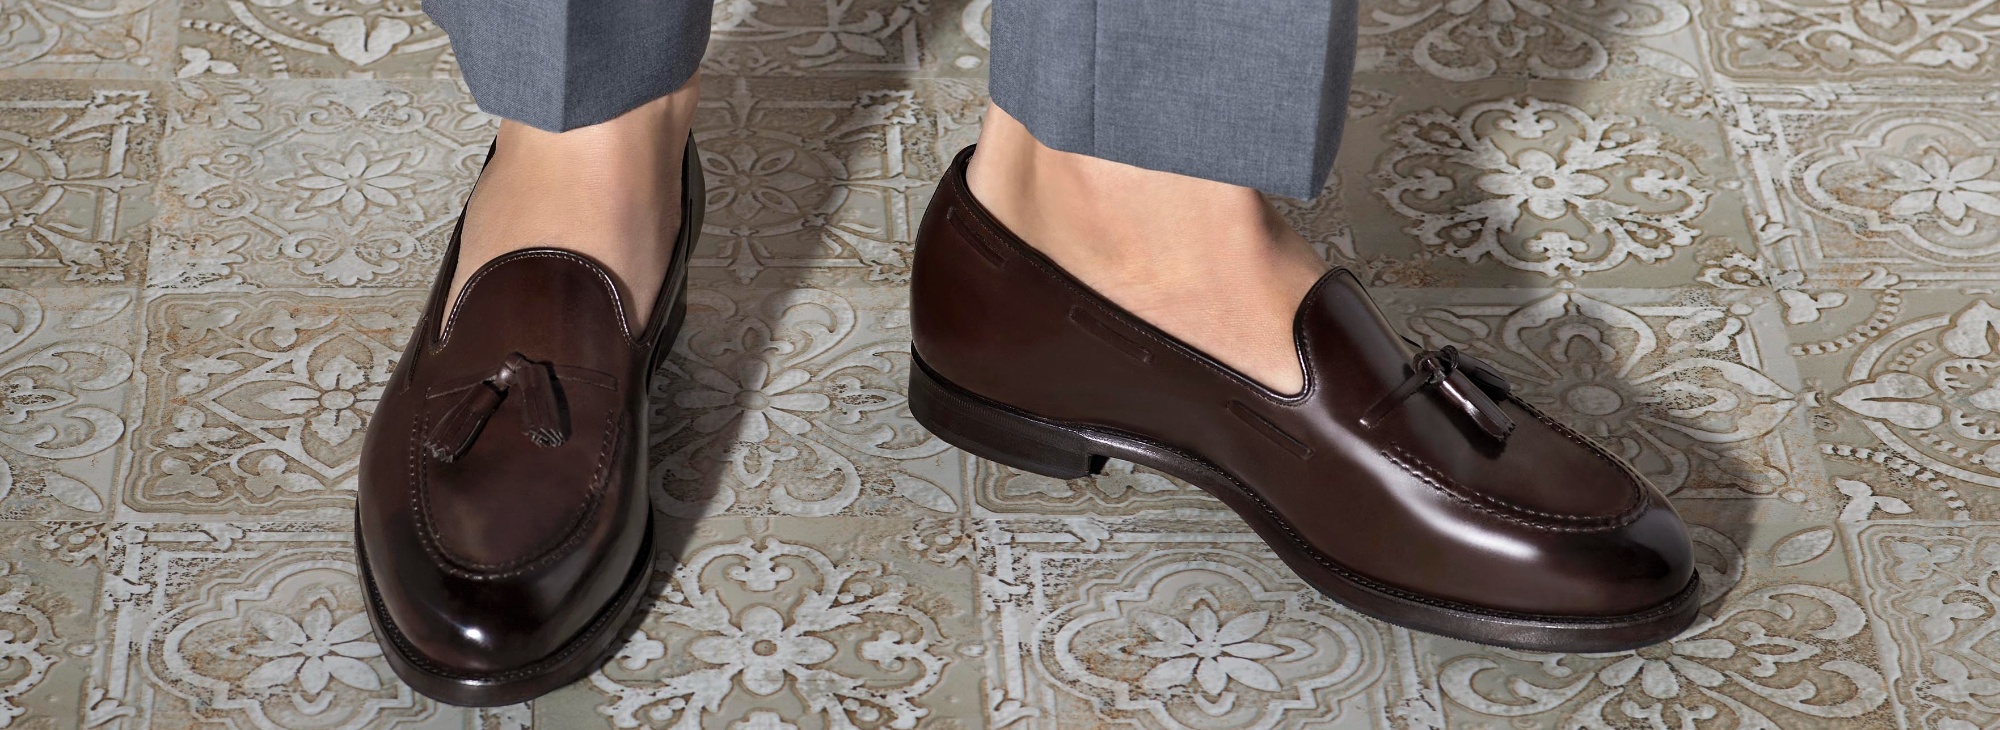 Tassel Loafers | Carlos Santos Shoes - Luxury Men Shoes